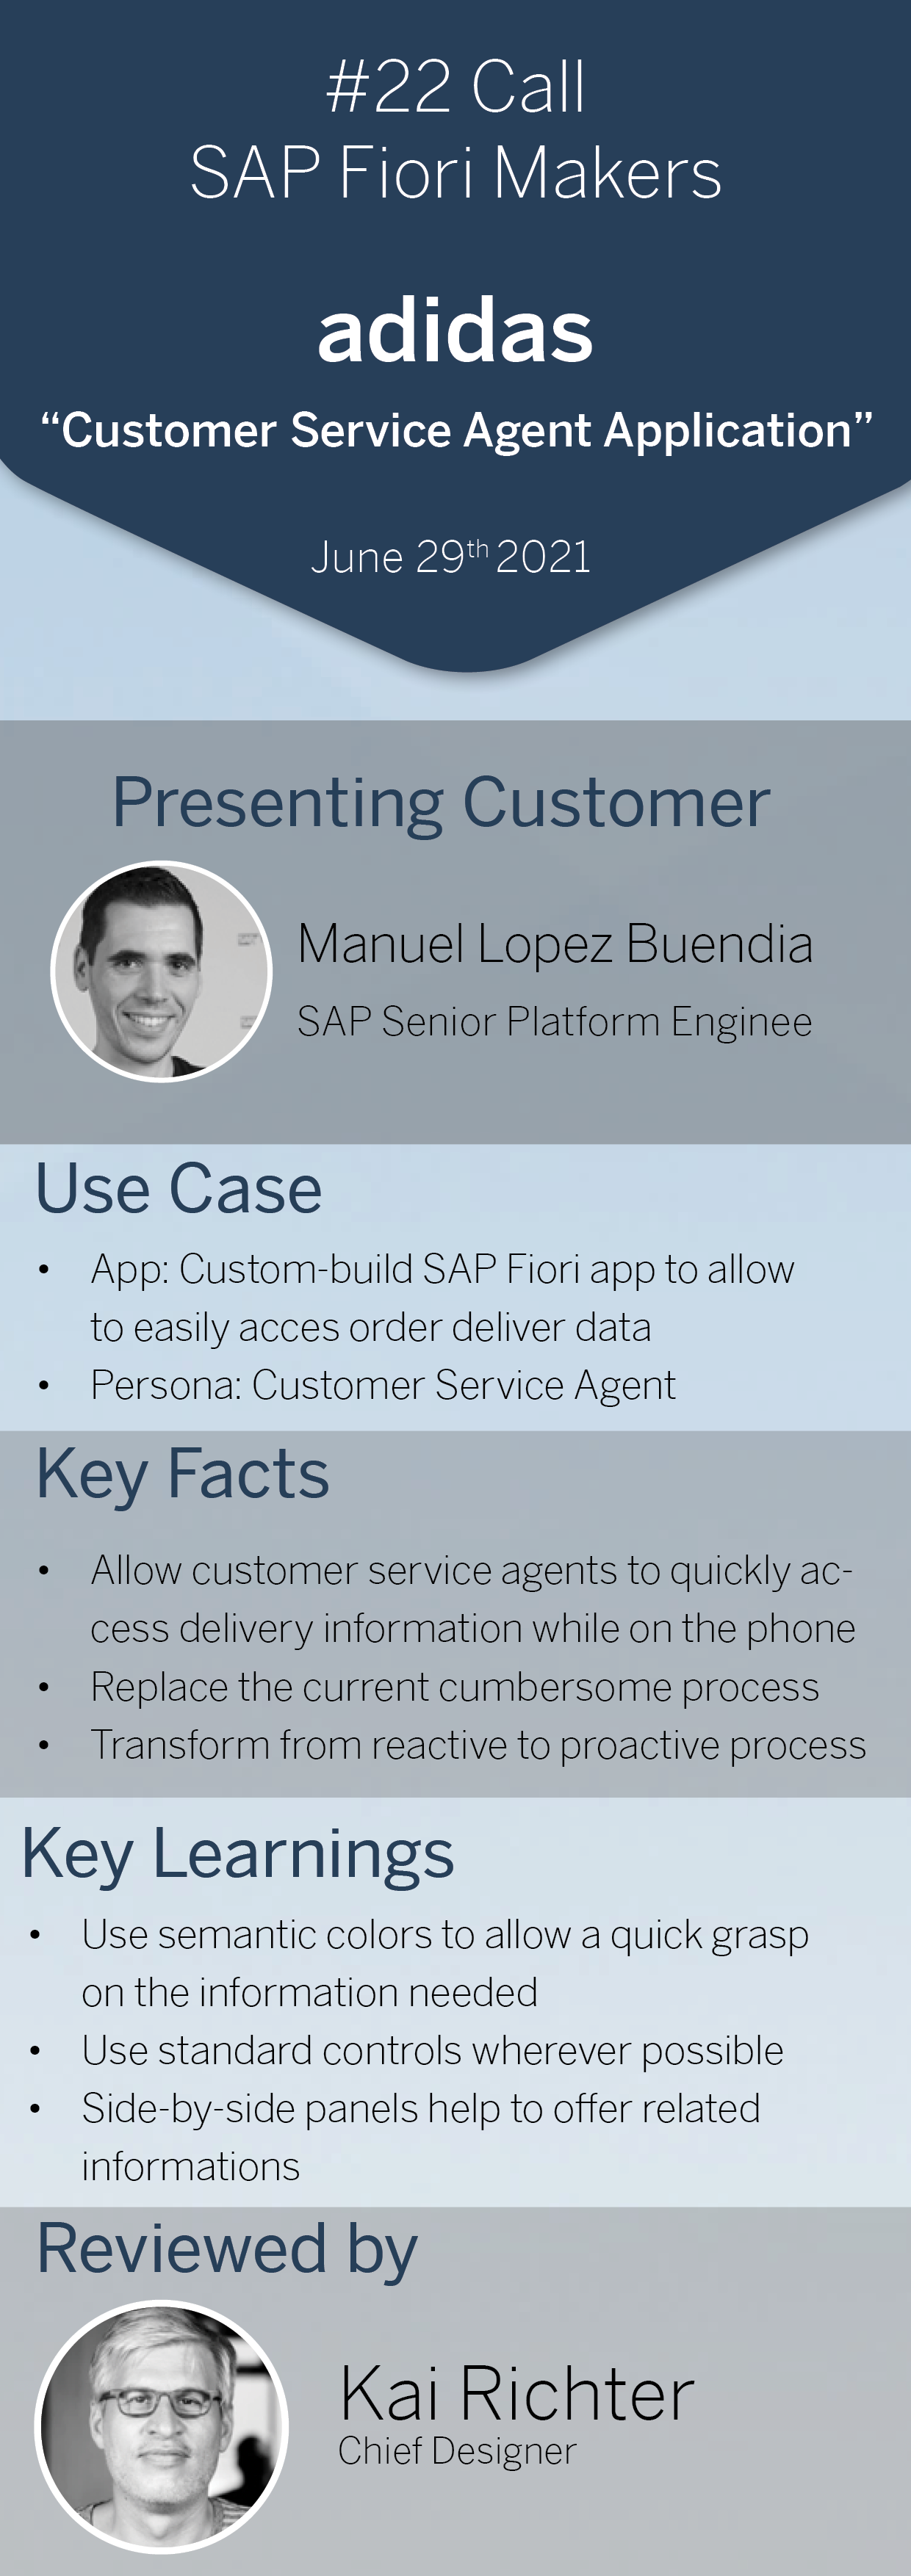 Customer Service Agent Application @ adidas – SAP ... - SAP Community